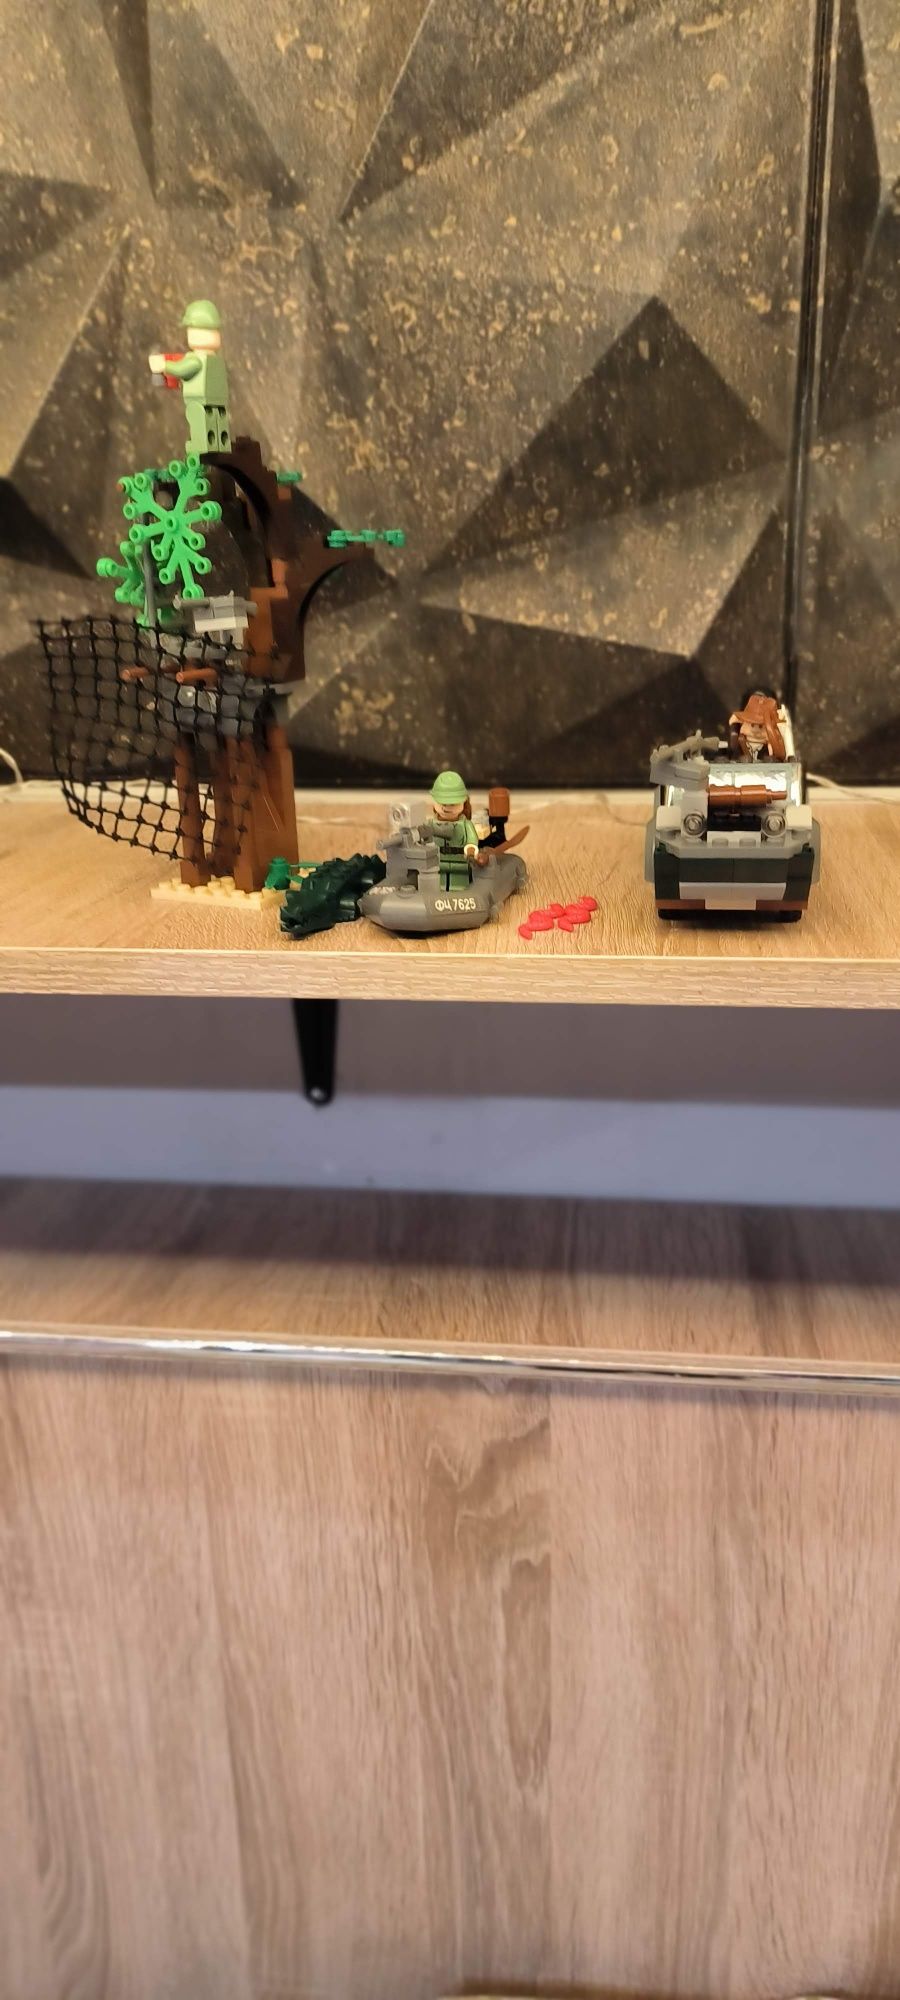 Lego 7625 Indiana Jones